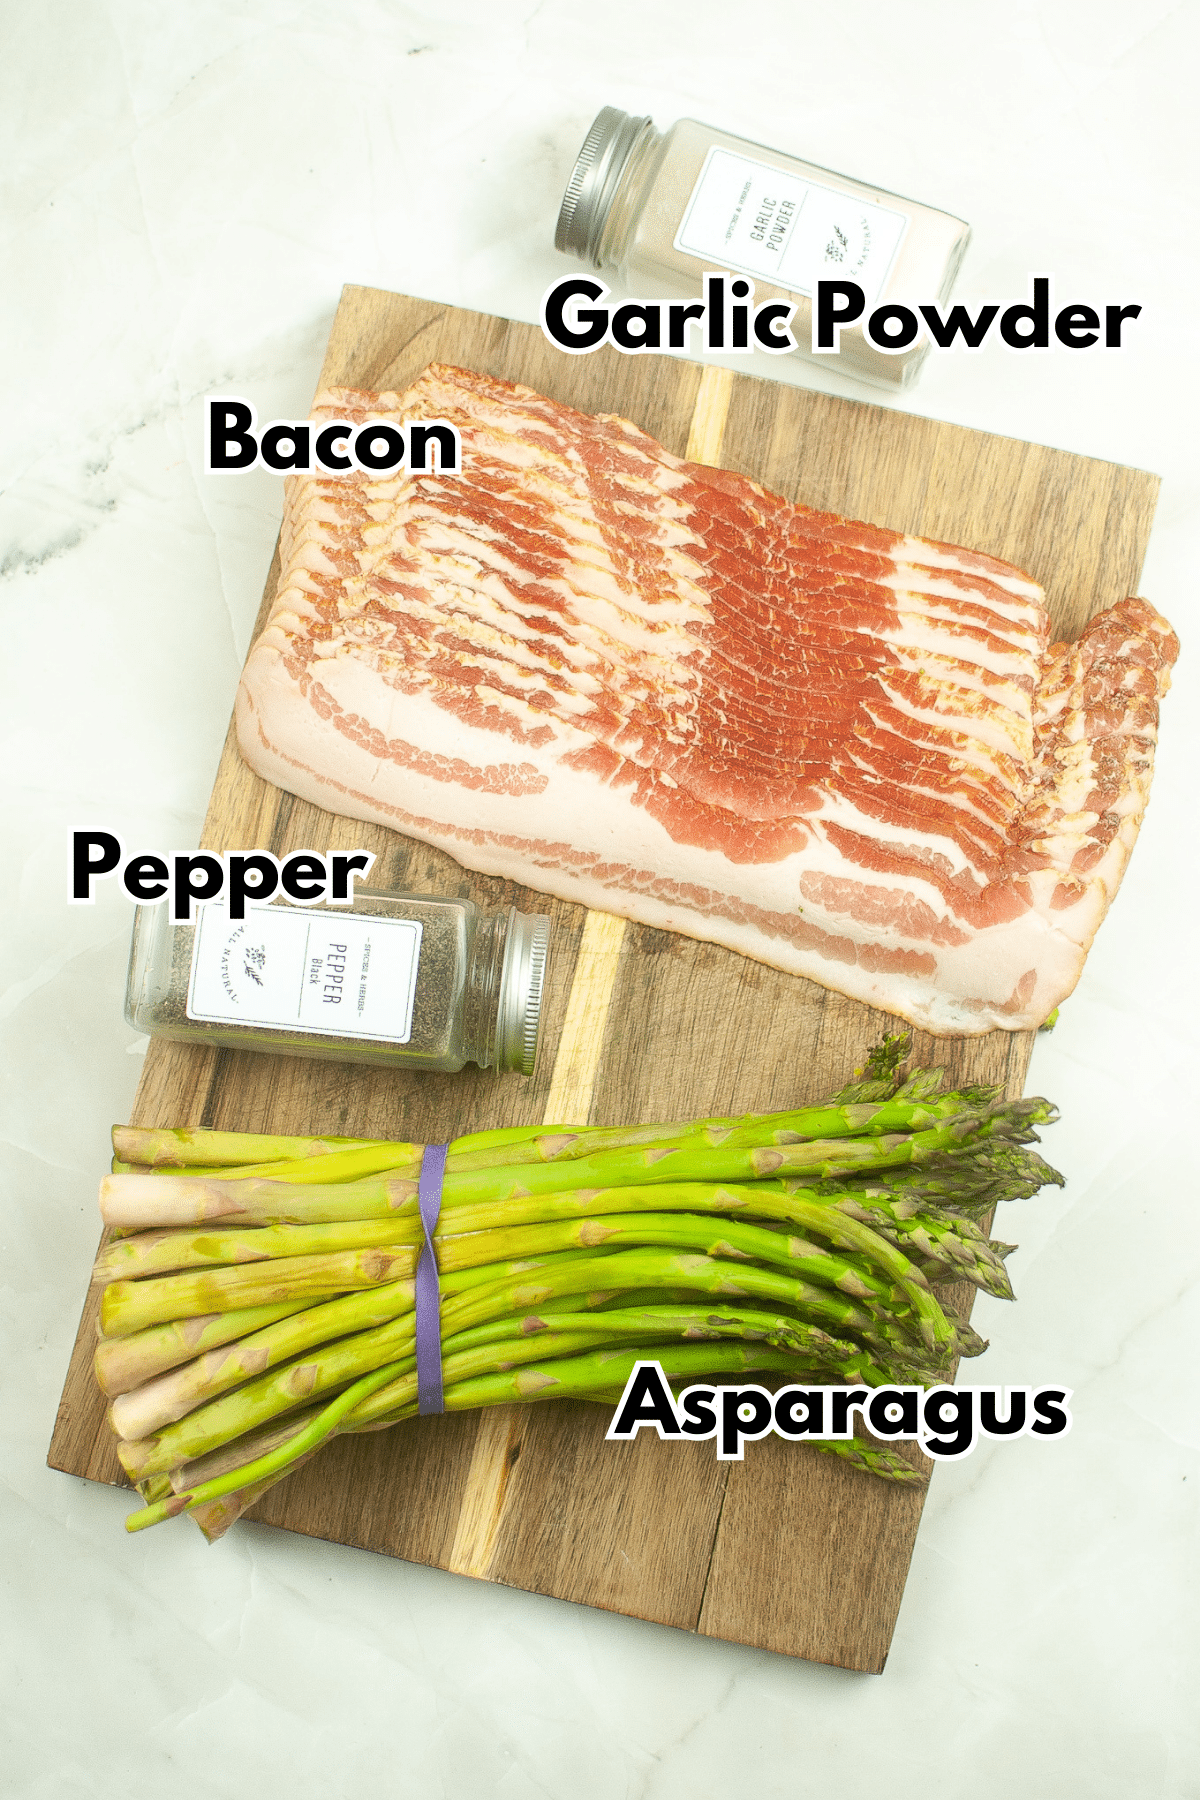 Bacon, asparagus and pepper on a cutting board next to a jar of garlic powder.